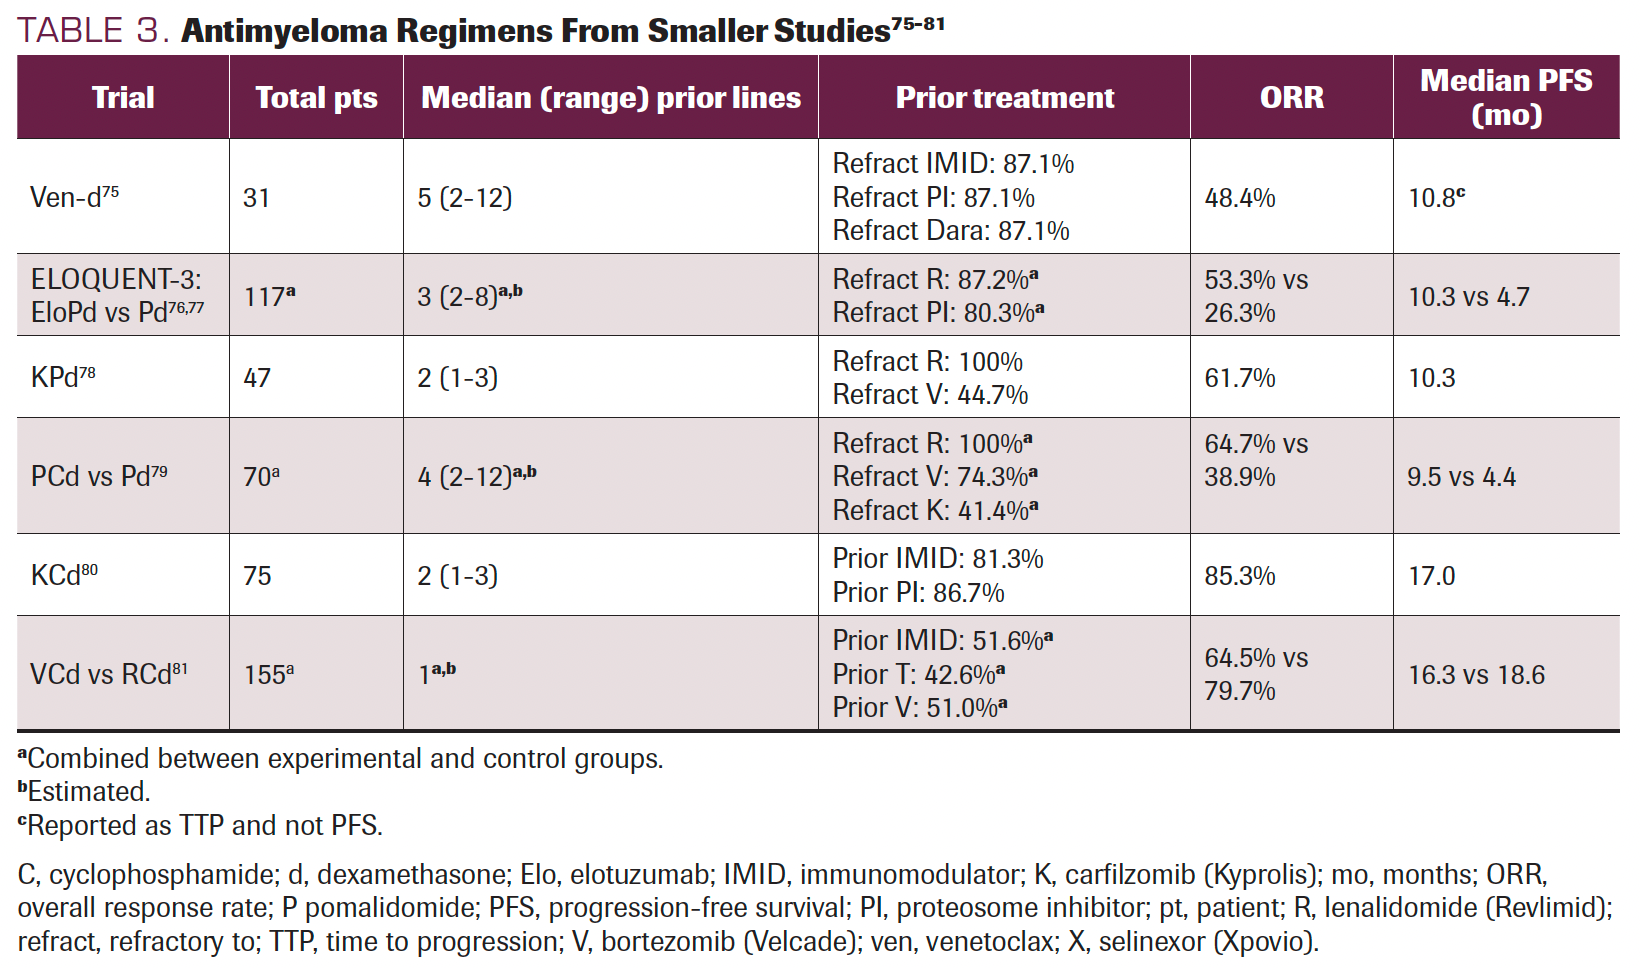 TABLE 3. Antimyeloma Regimens From Smaller Studies75-81